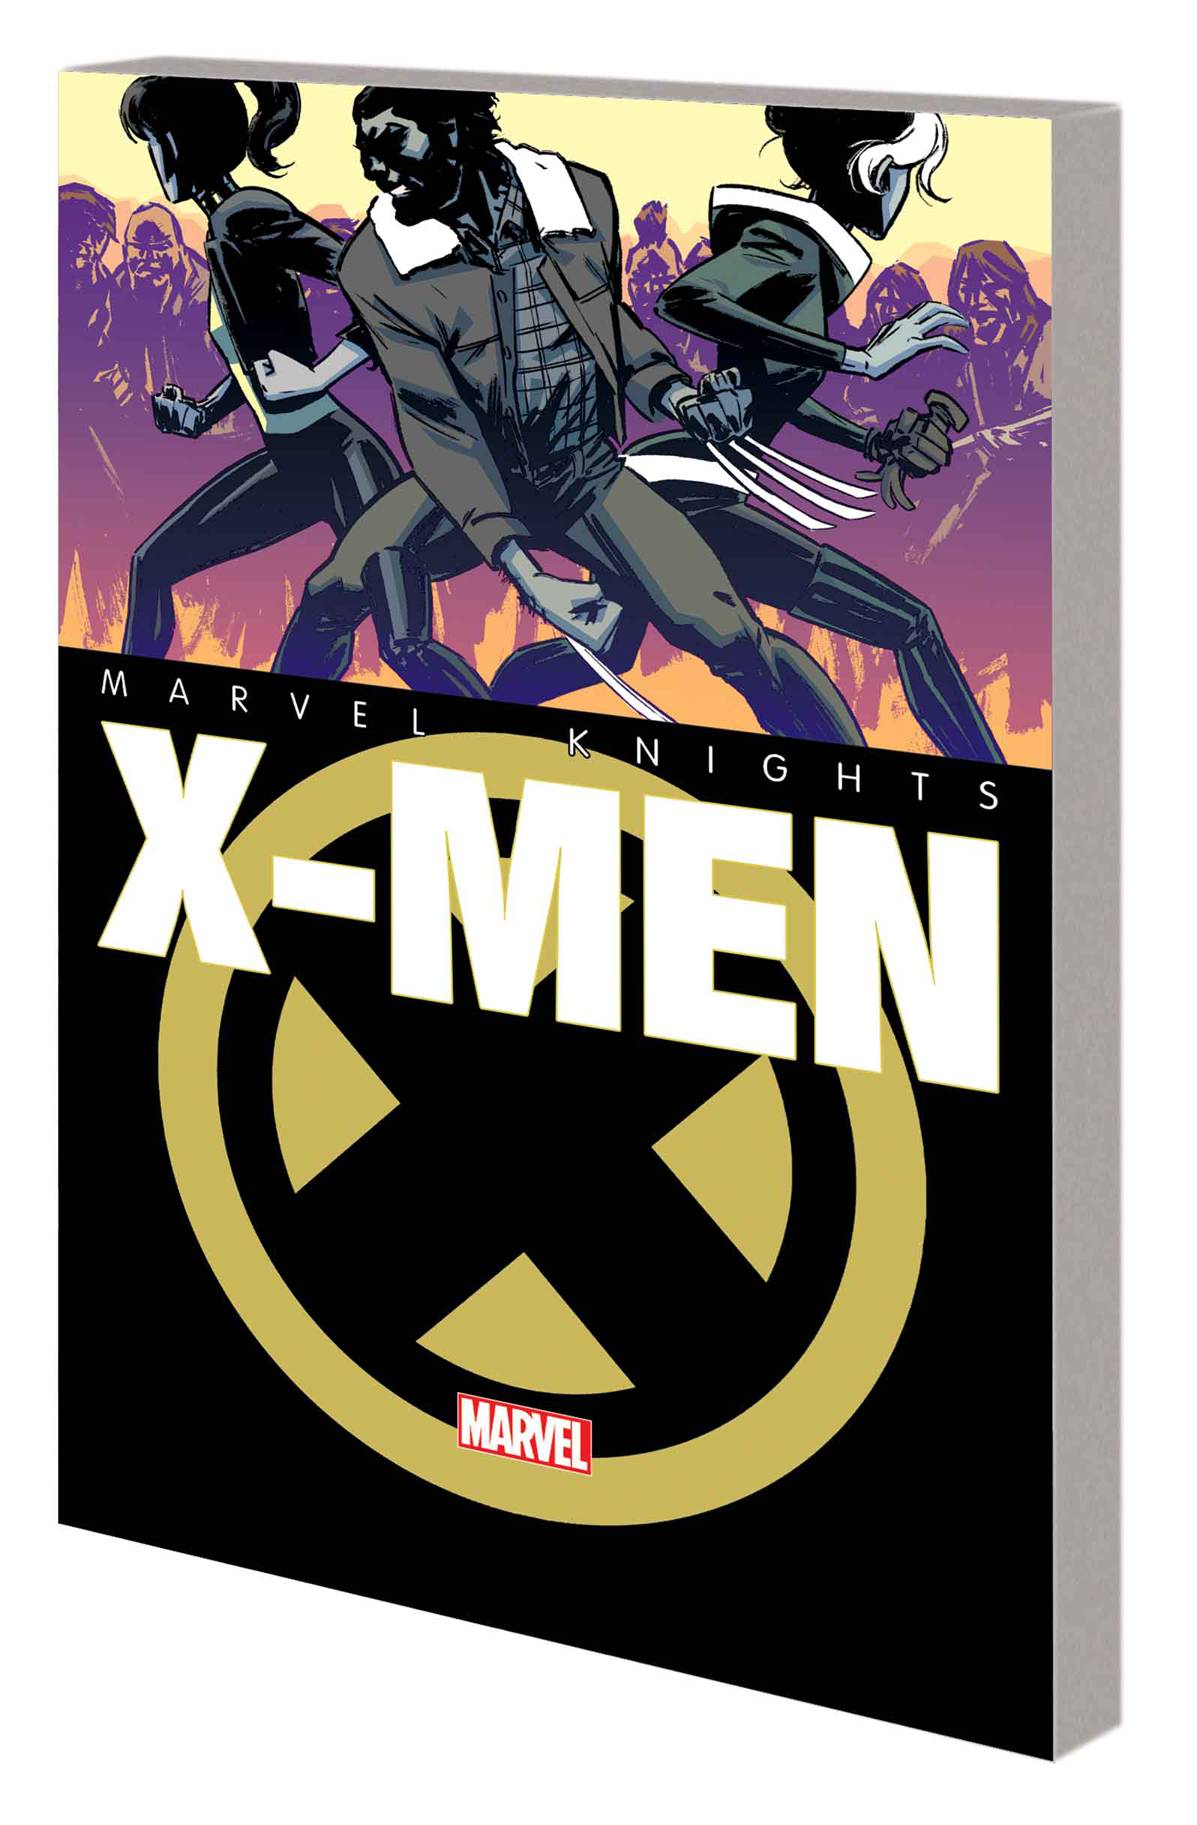 Marvel Knights X-Men Graphic Novel Haunted